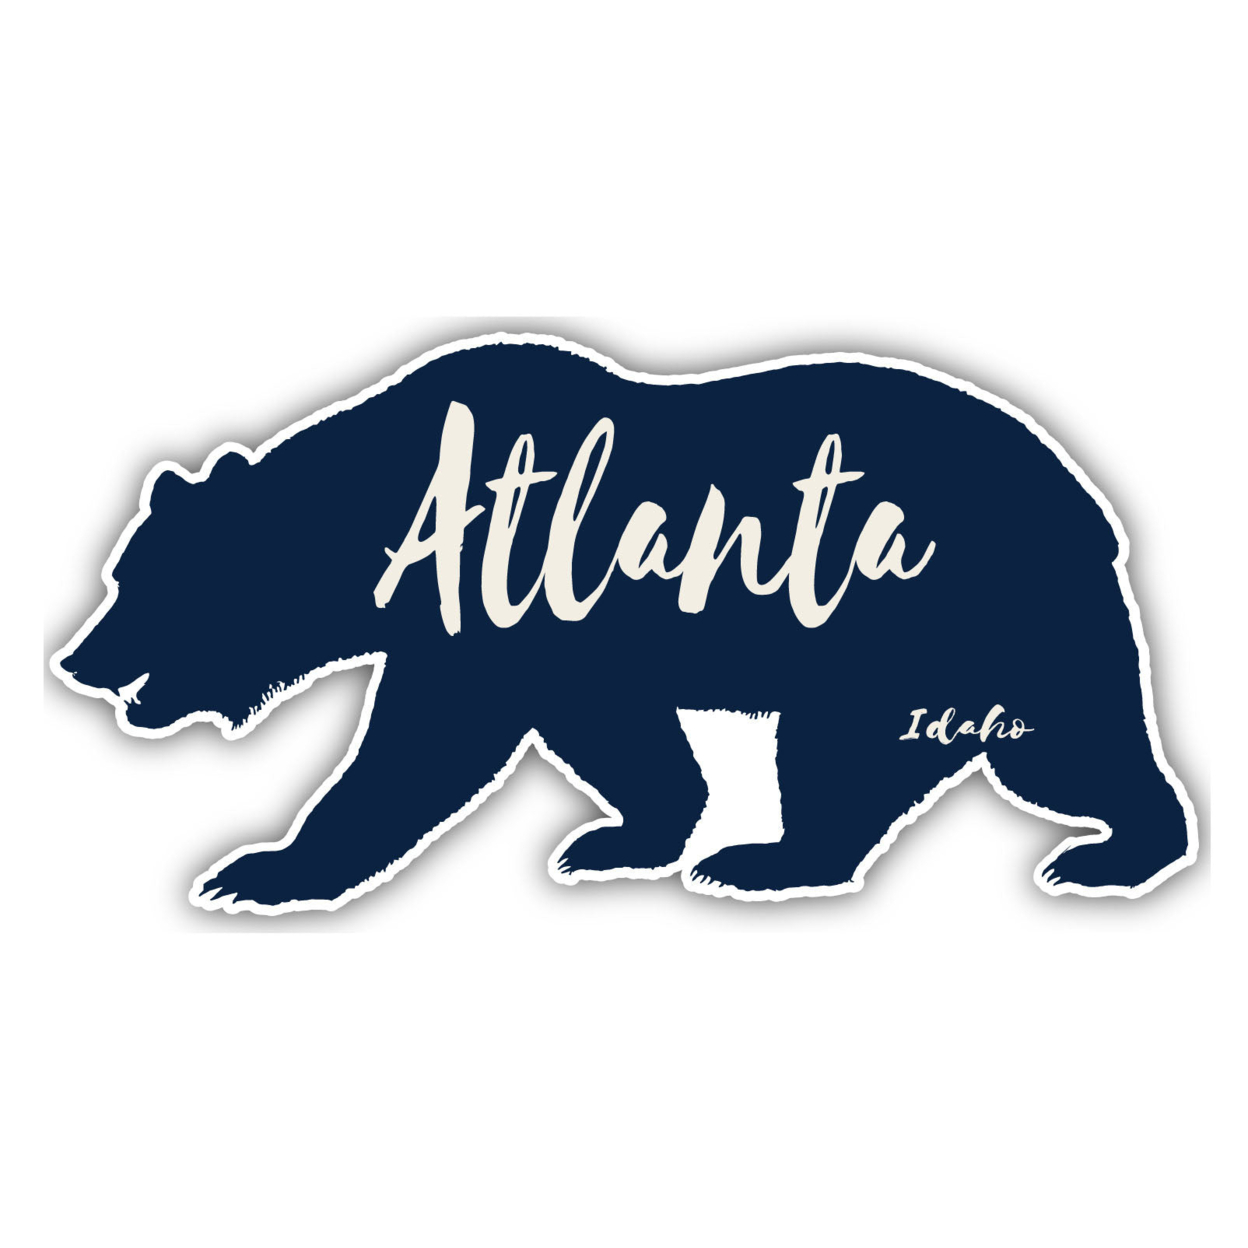 Atlanta Idaho Souvenir Decorative Stickers (Choose Theme And Size) - 4-Pack, 4-Inch, Bear